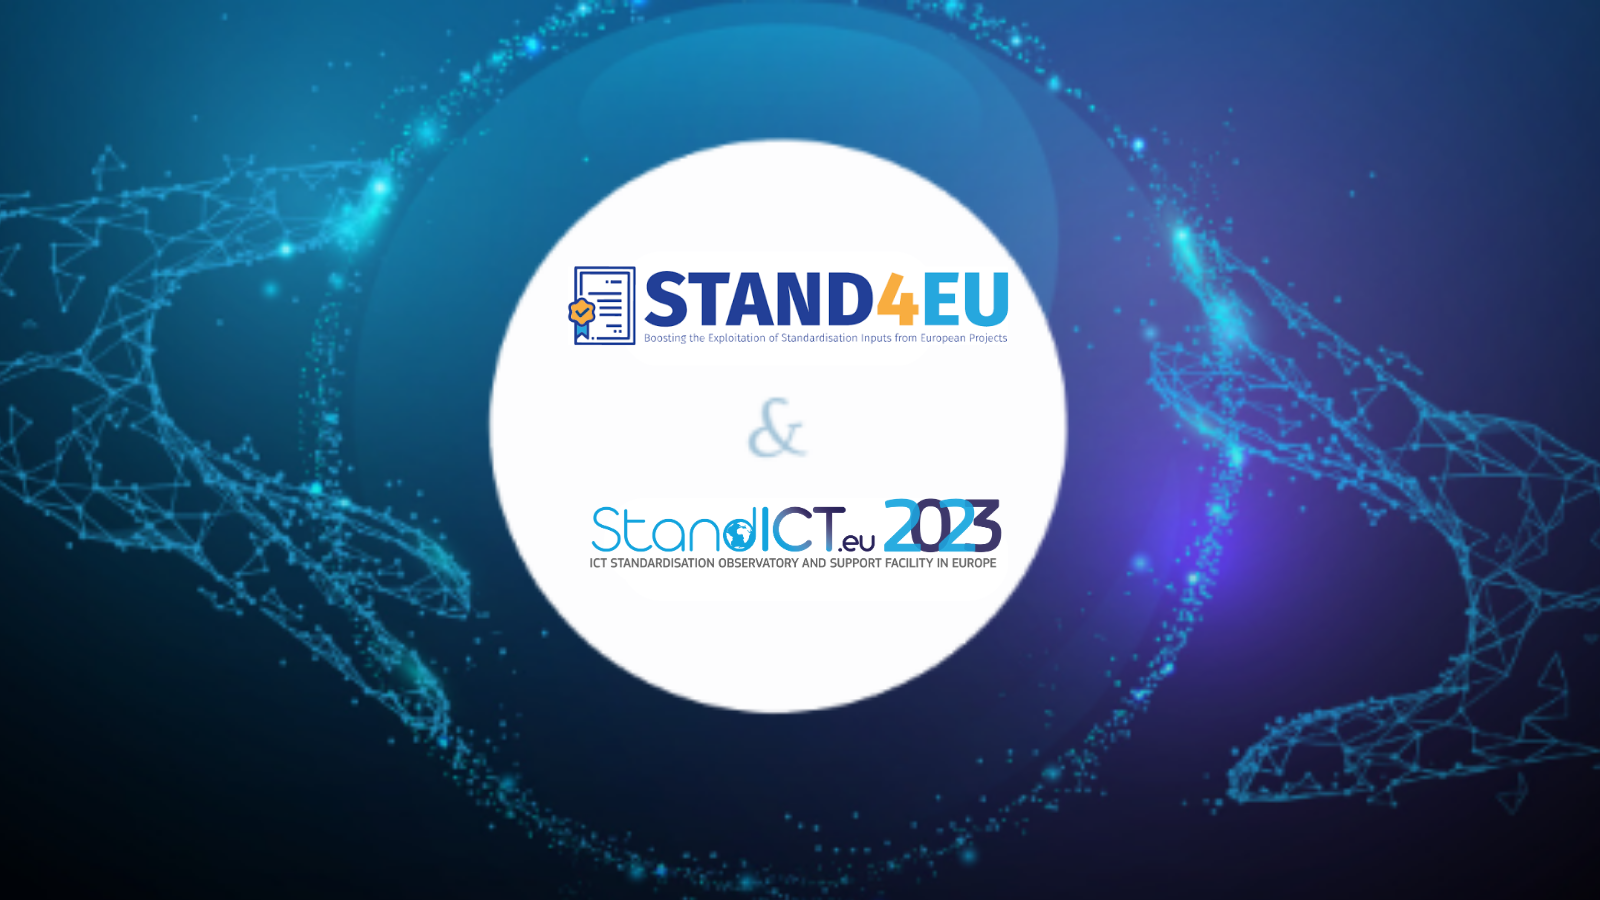 StandICT & Stand4EU Start Collaboration